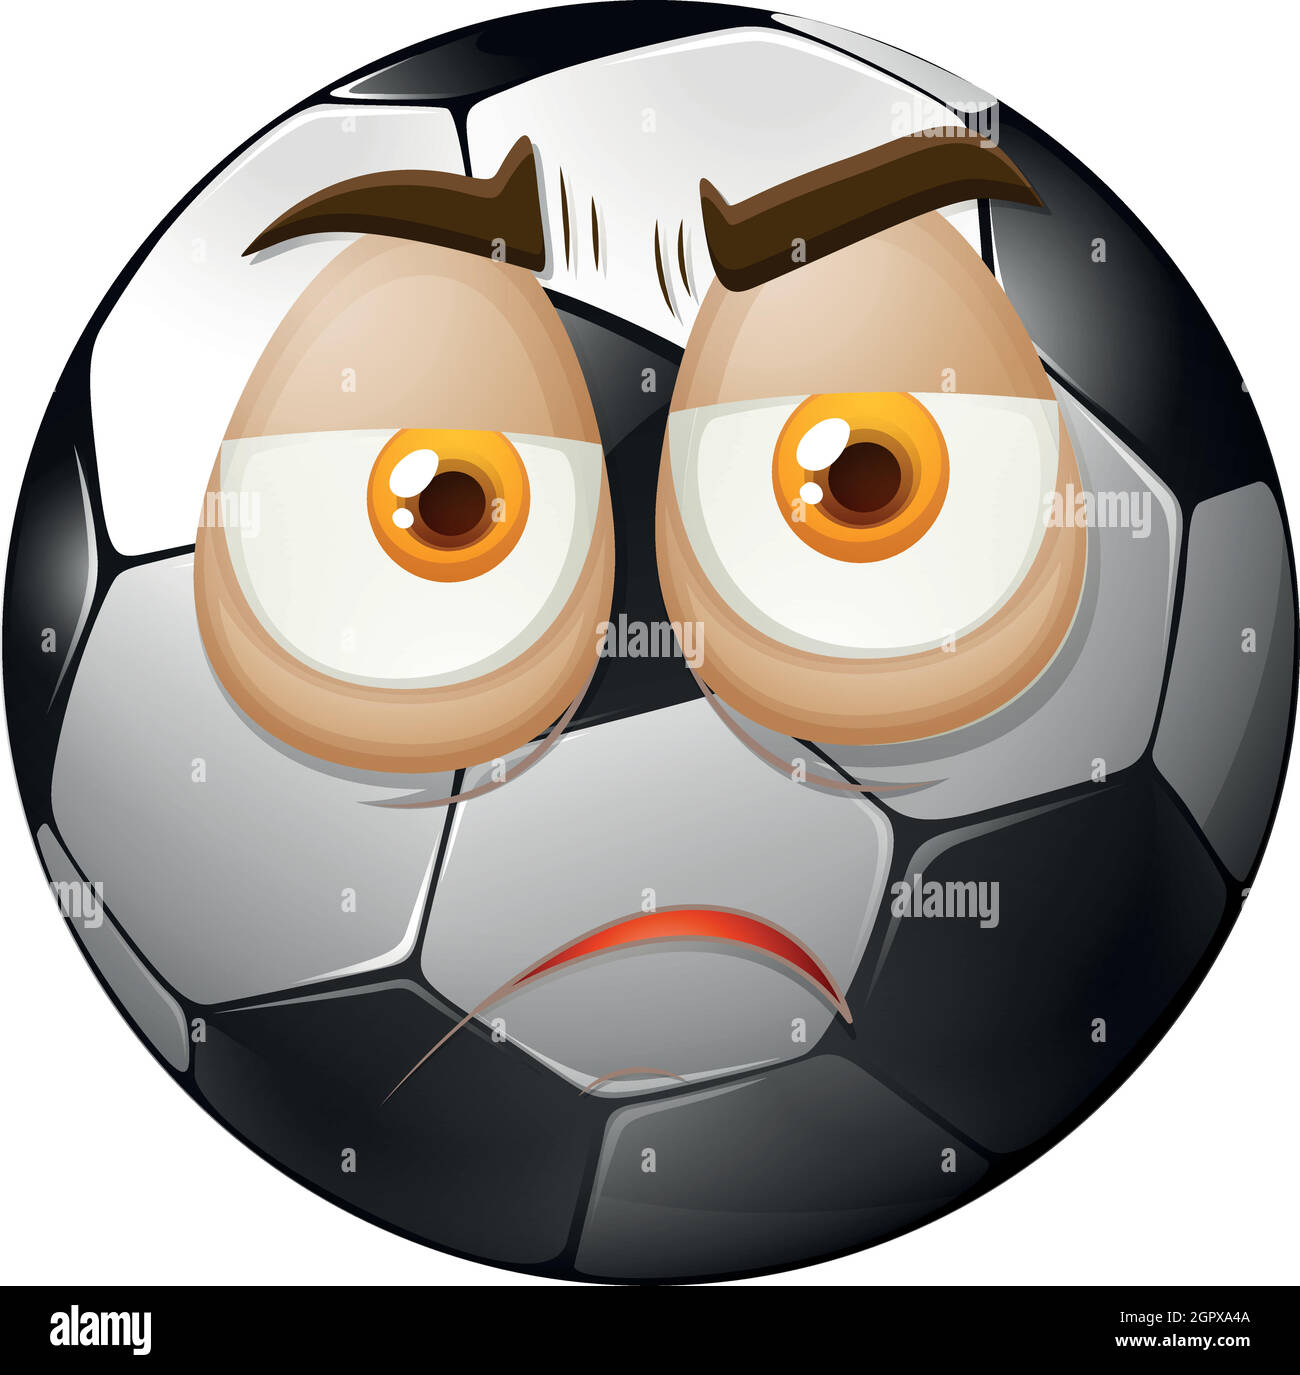 Football with sad face Stock Vector